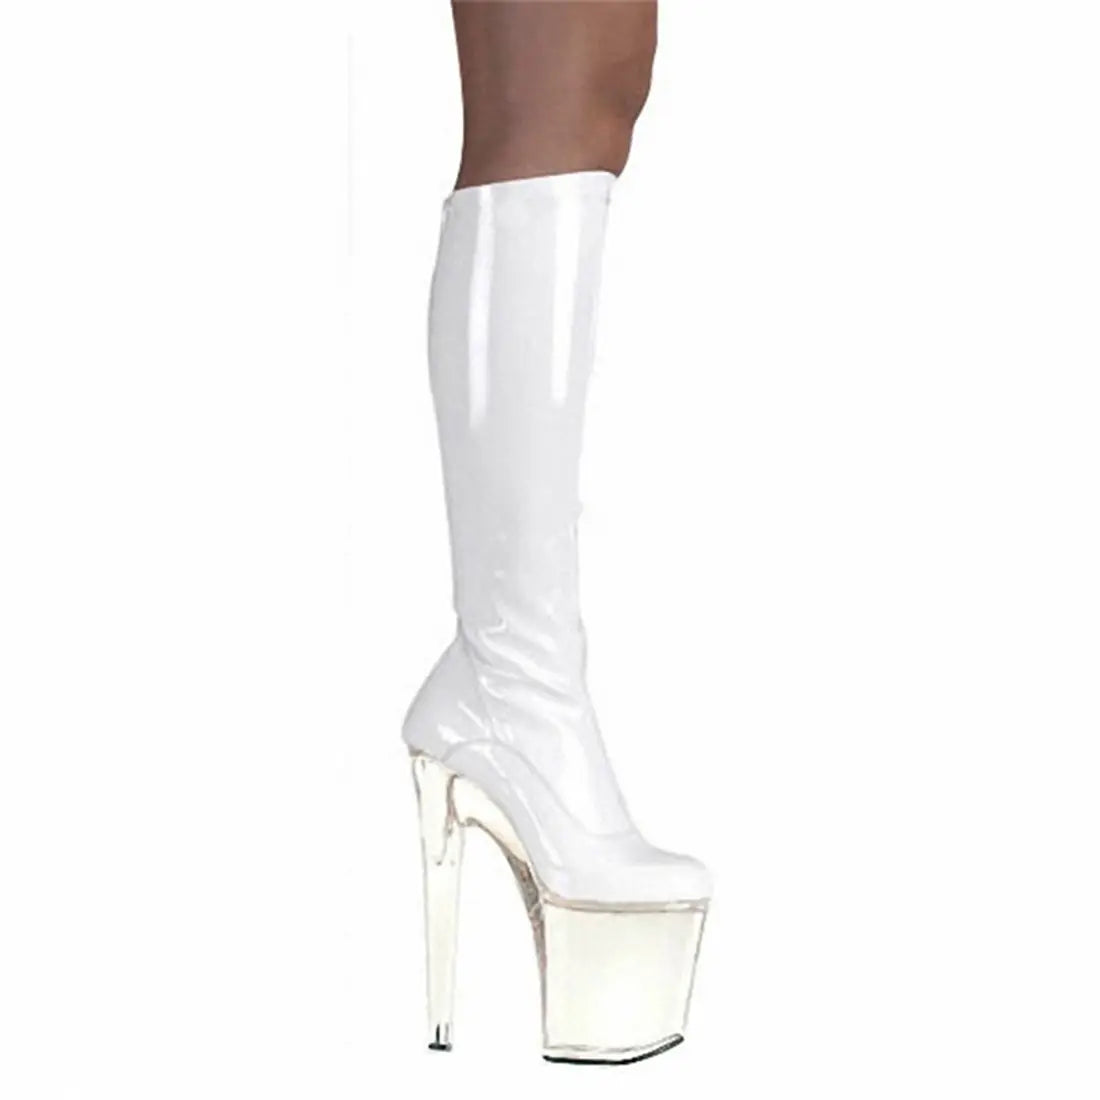 20cm Stiletto High Heel Drag Queen Boots Black Patent